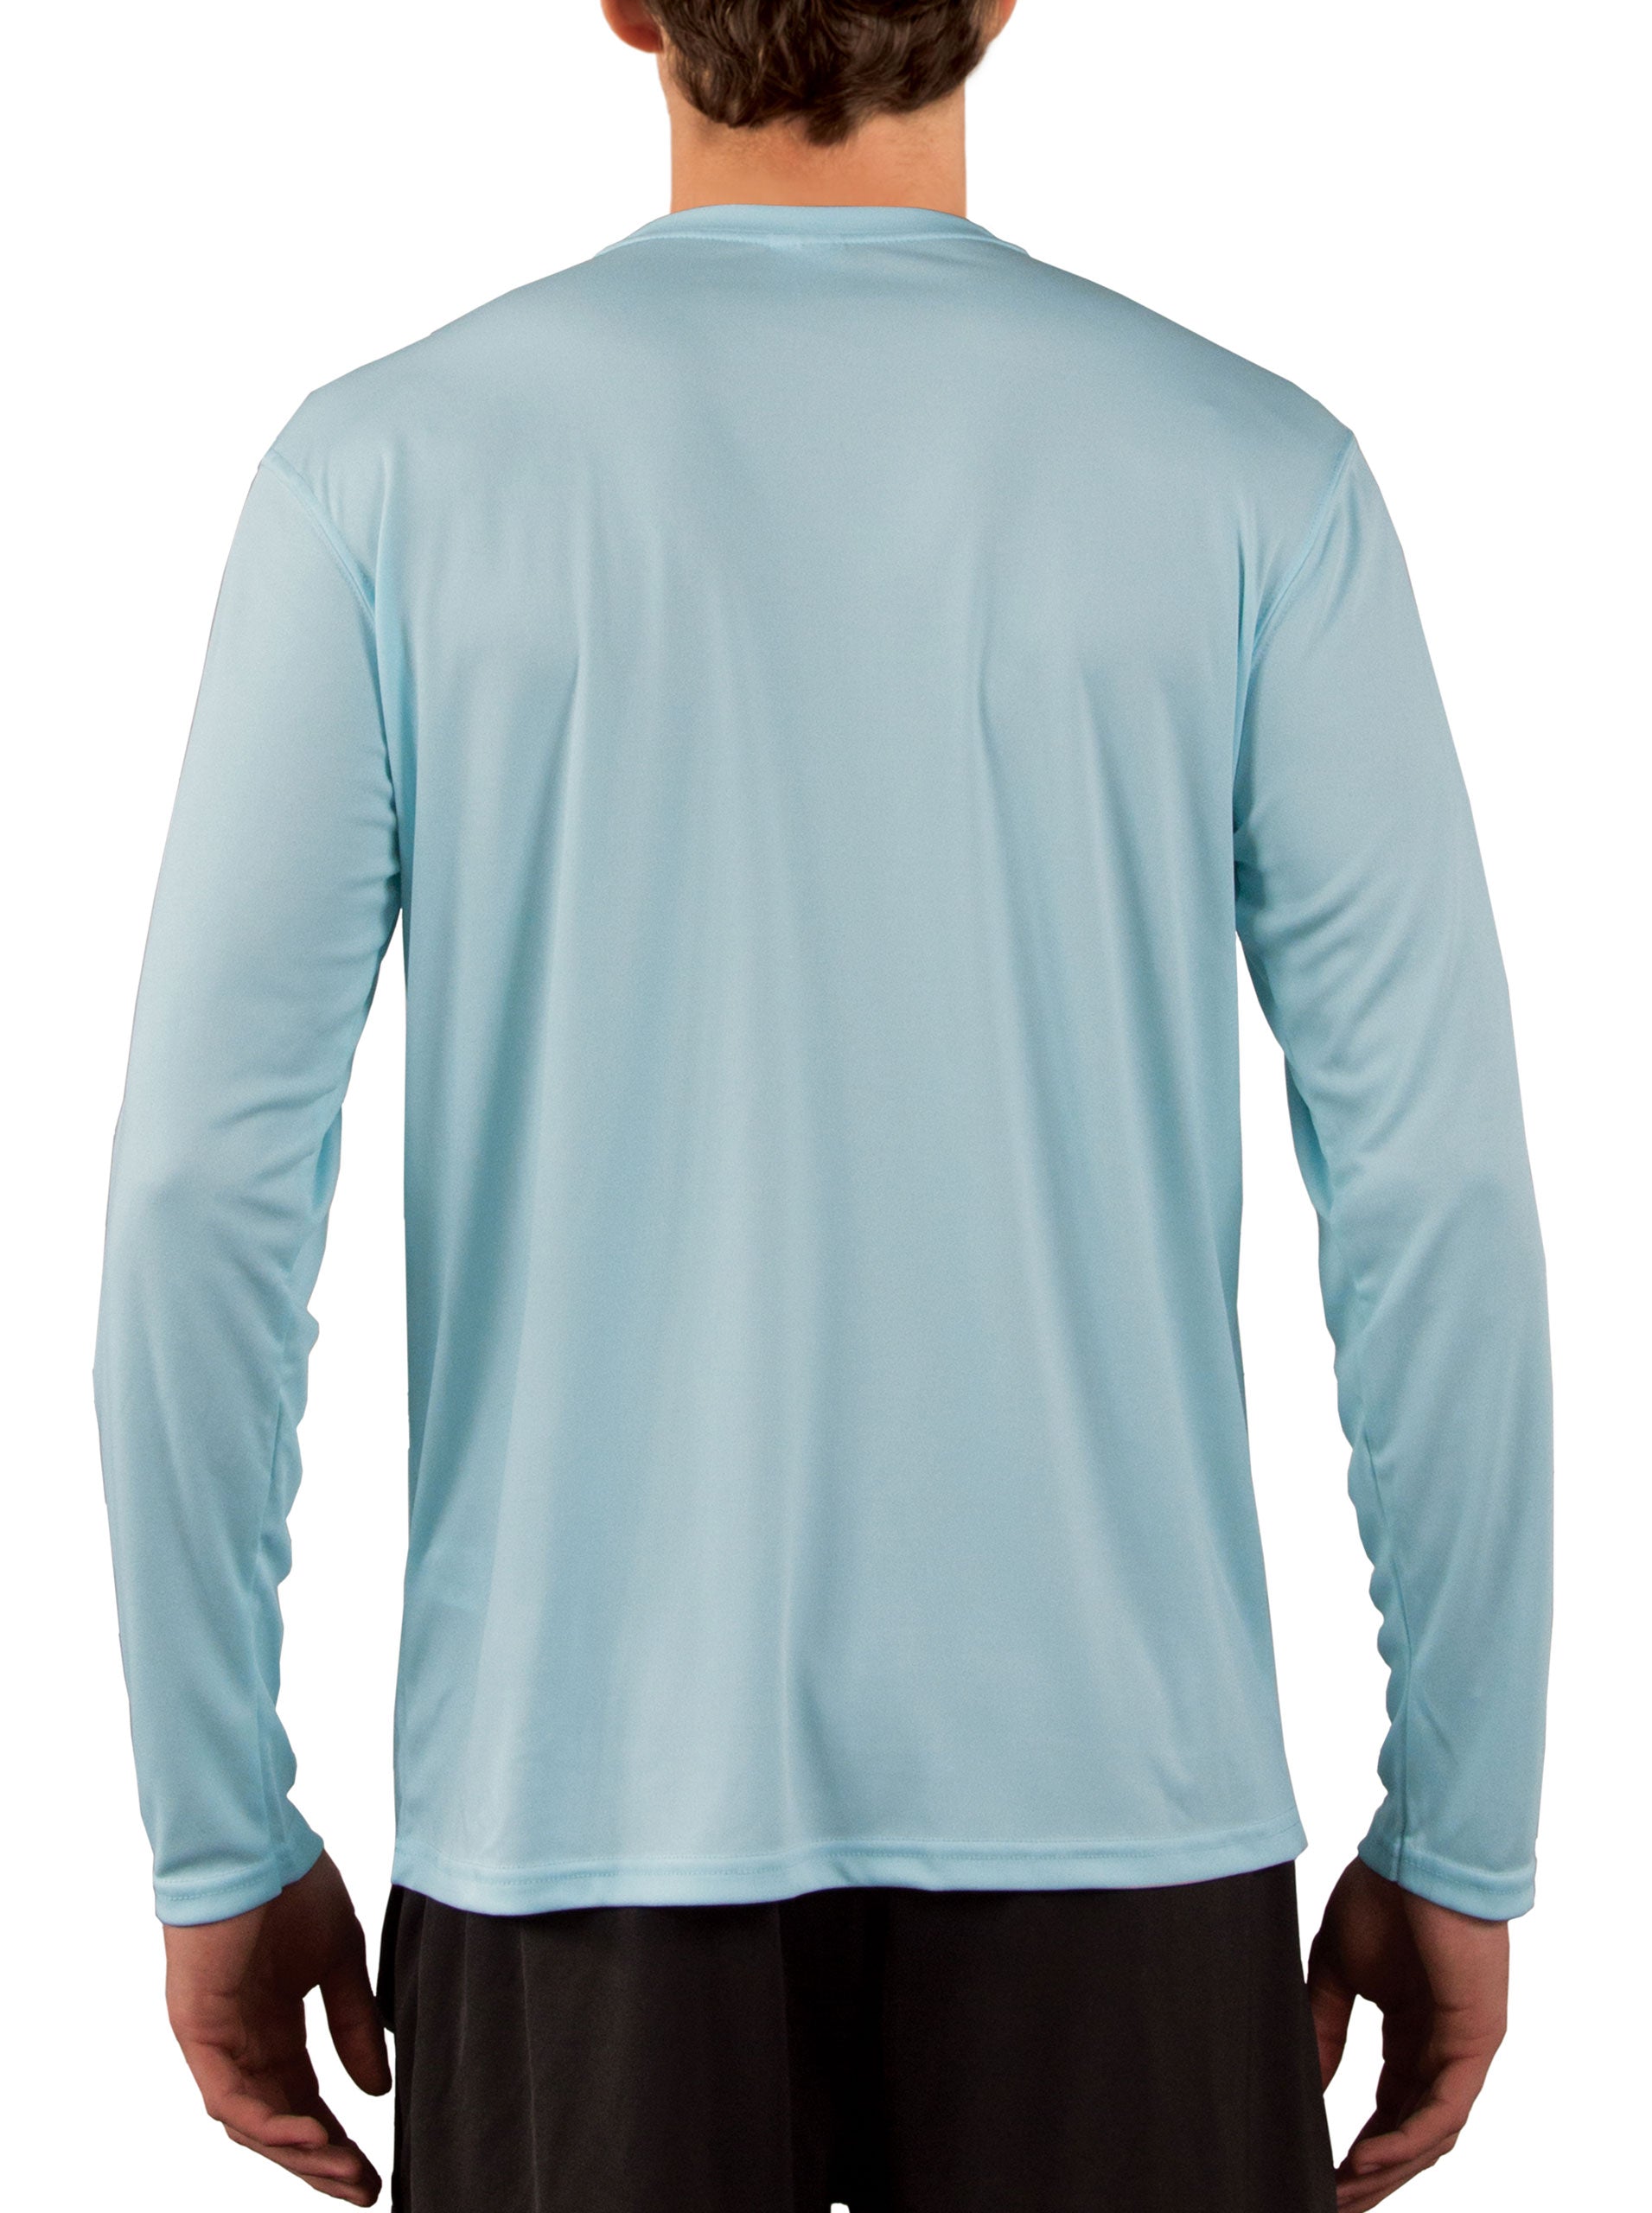 Real Essentials Mens Long Sleeve T-Shirt Fishing Swim Hiking Beach